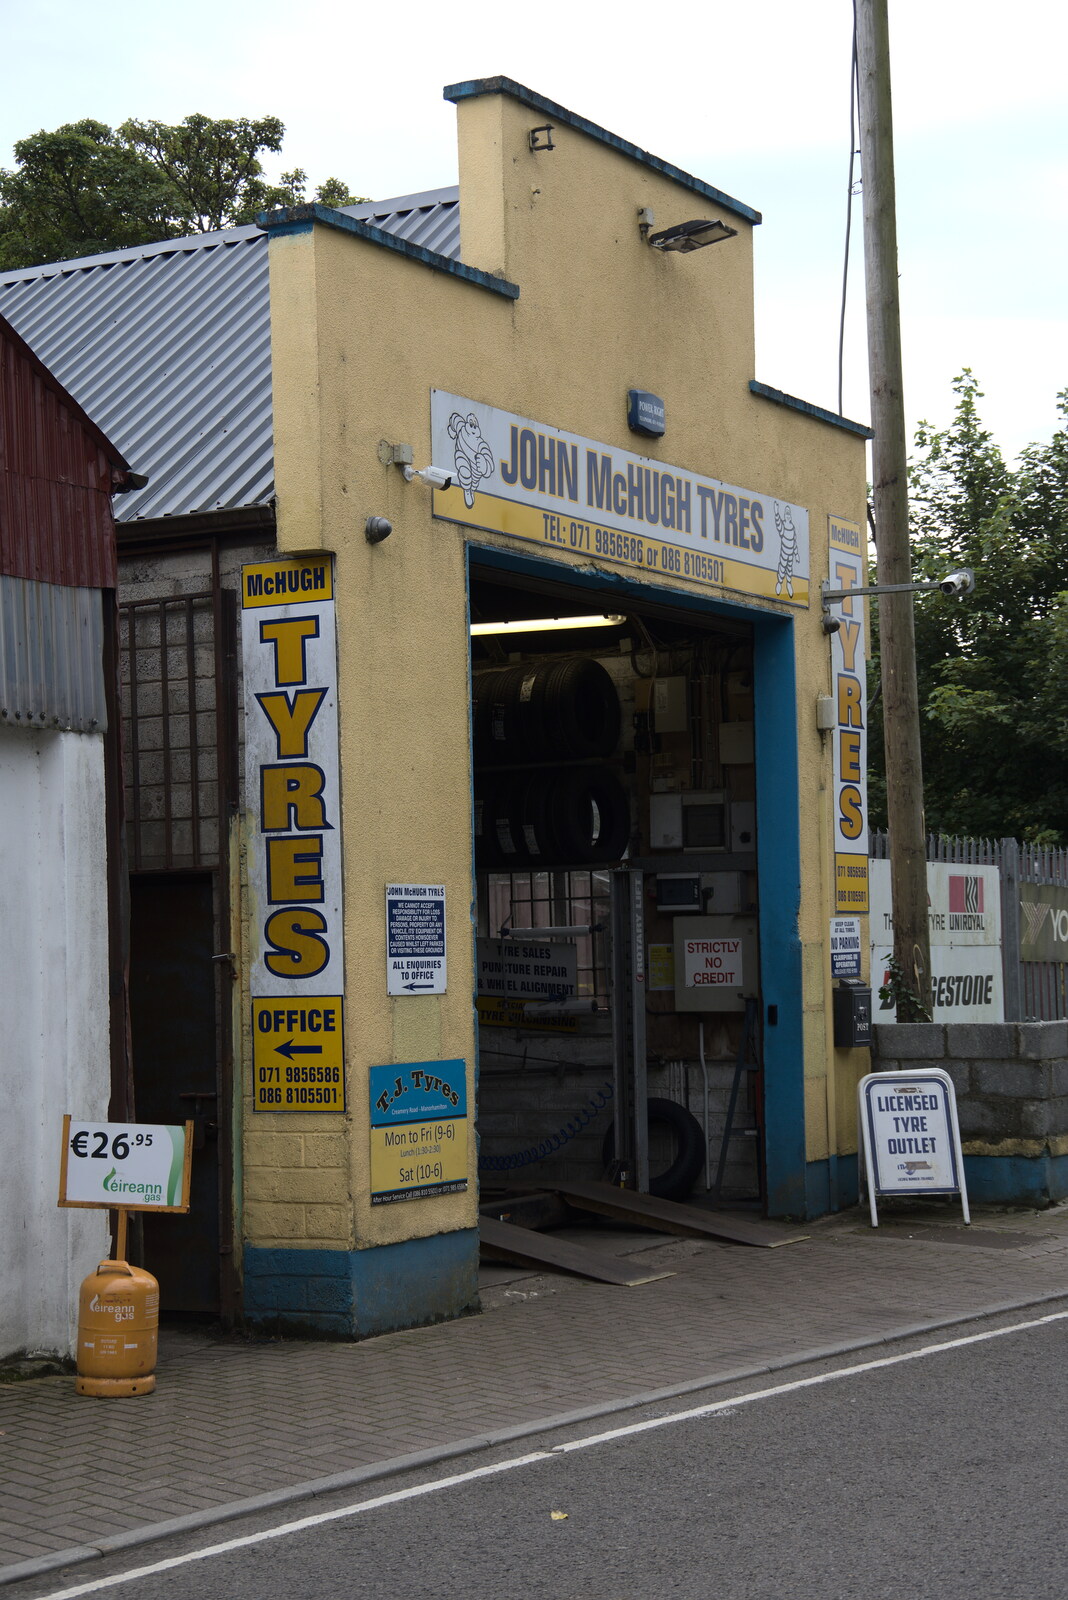 A Trip to Manorhamilton, County Leitrim, Ireland - 11th August 2021: Old-school John McHugh Tyres